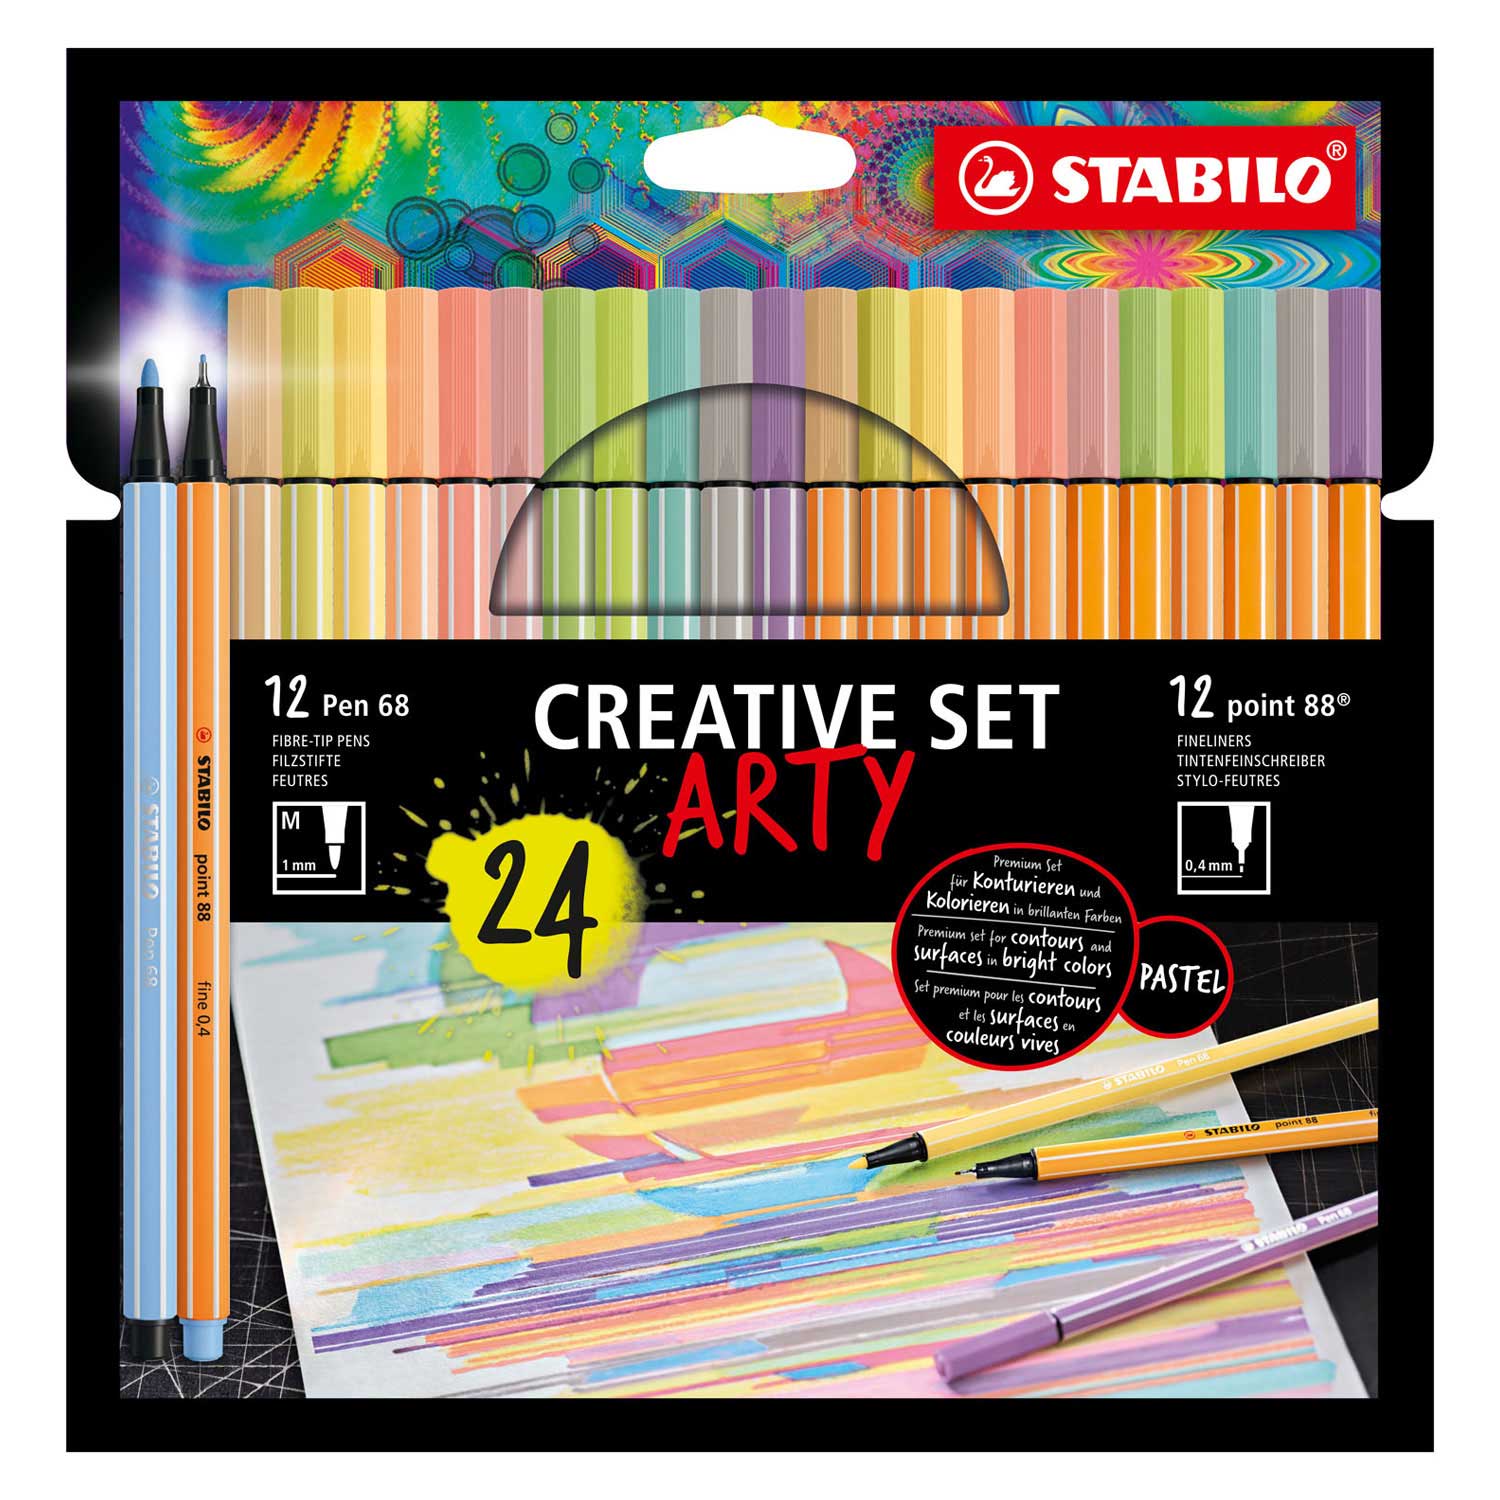 STABILO Creative Set - Pen 68 & Point 88 Pastel - ARTY - Combi Etui 24 Stuks